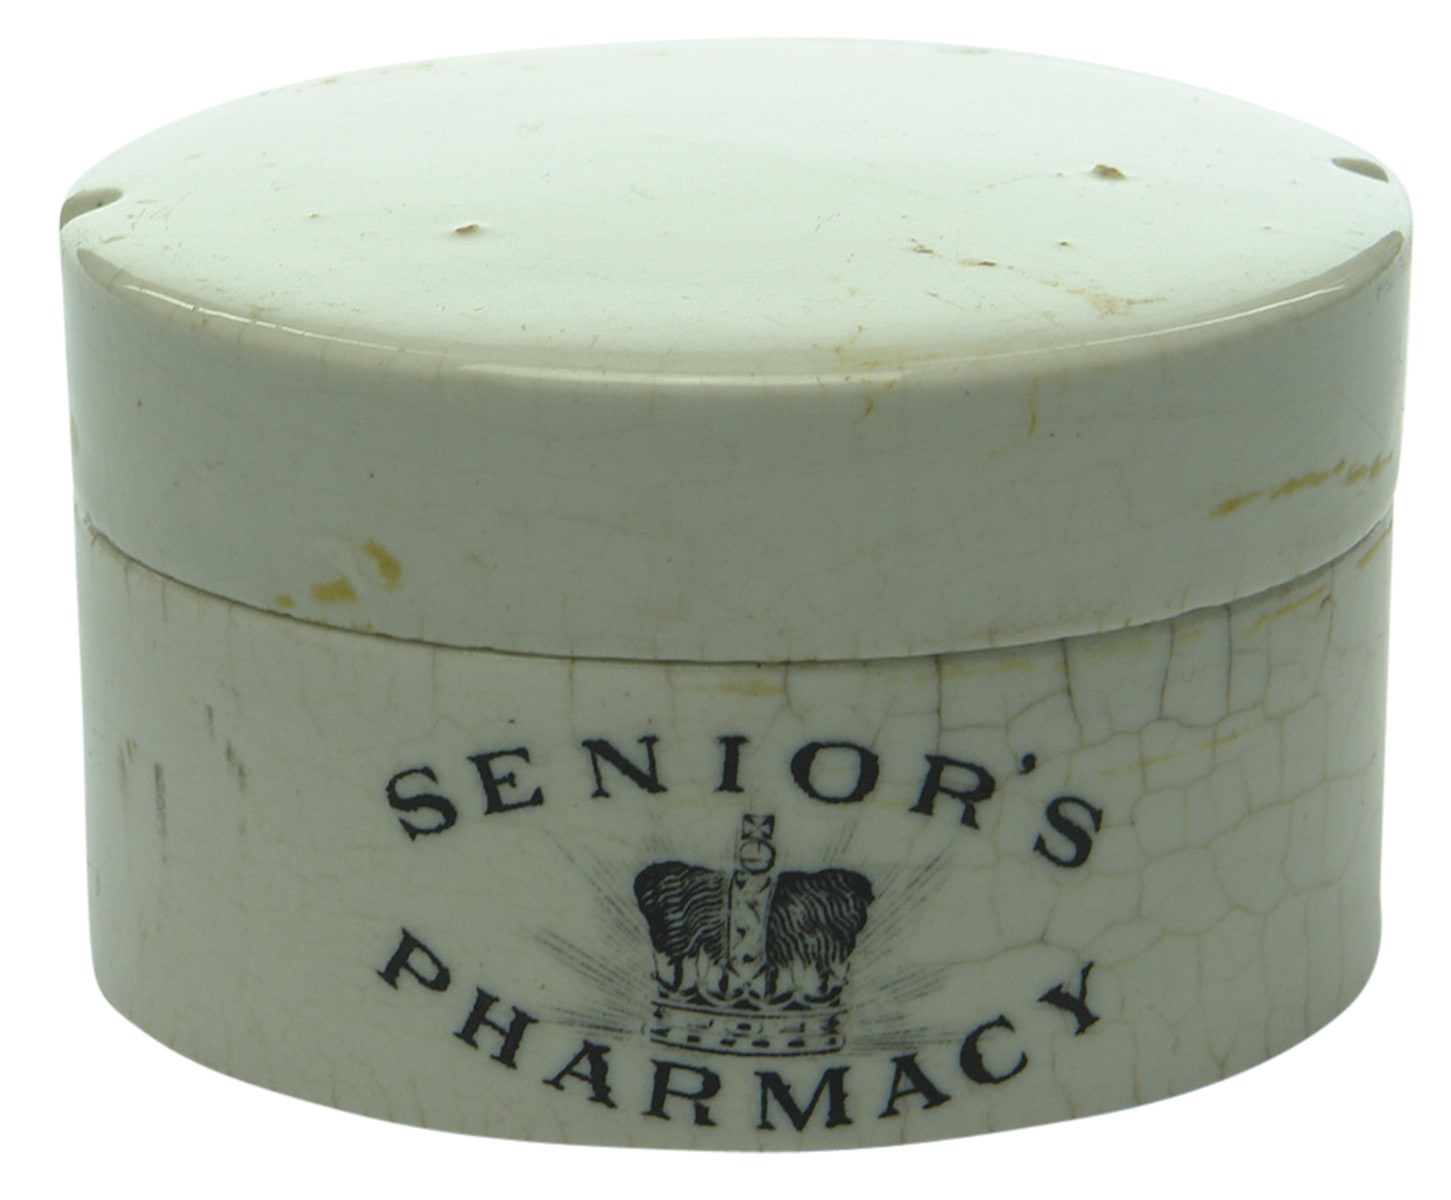 Senior's Pharmacy Crown Ceramic Ointment Pot